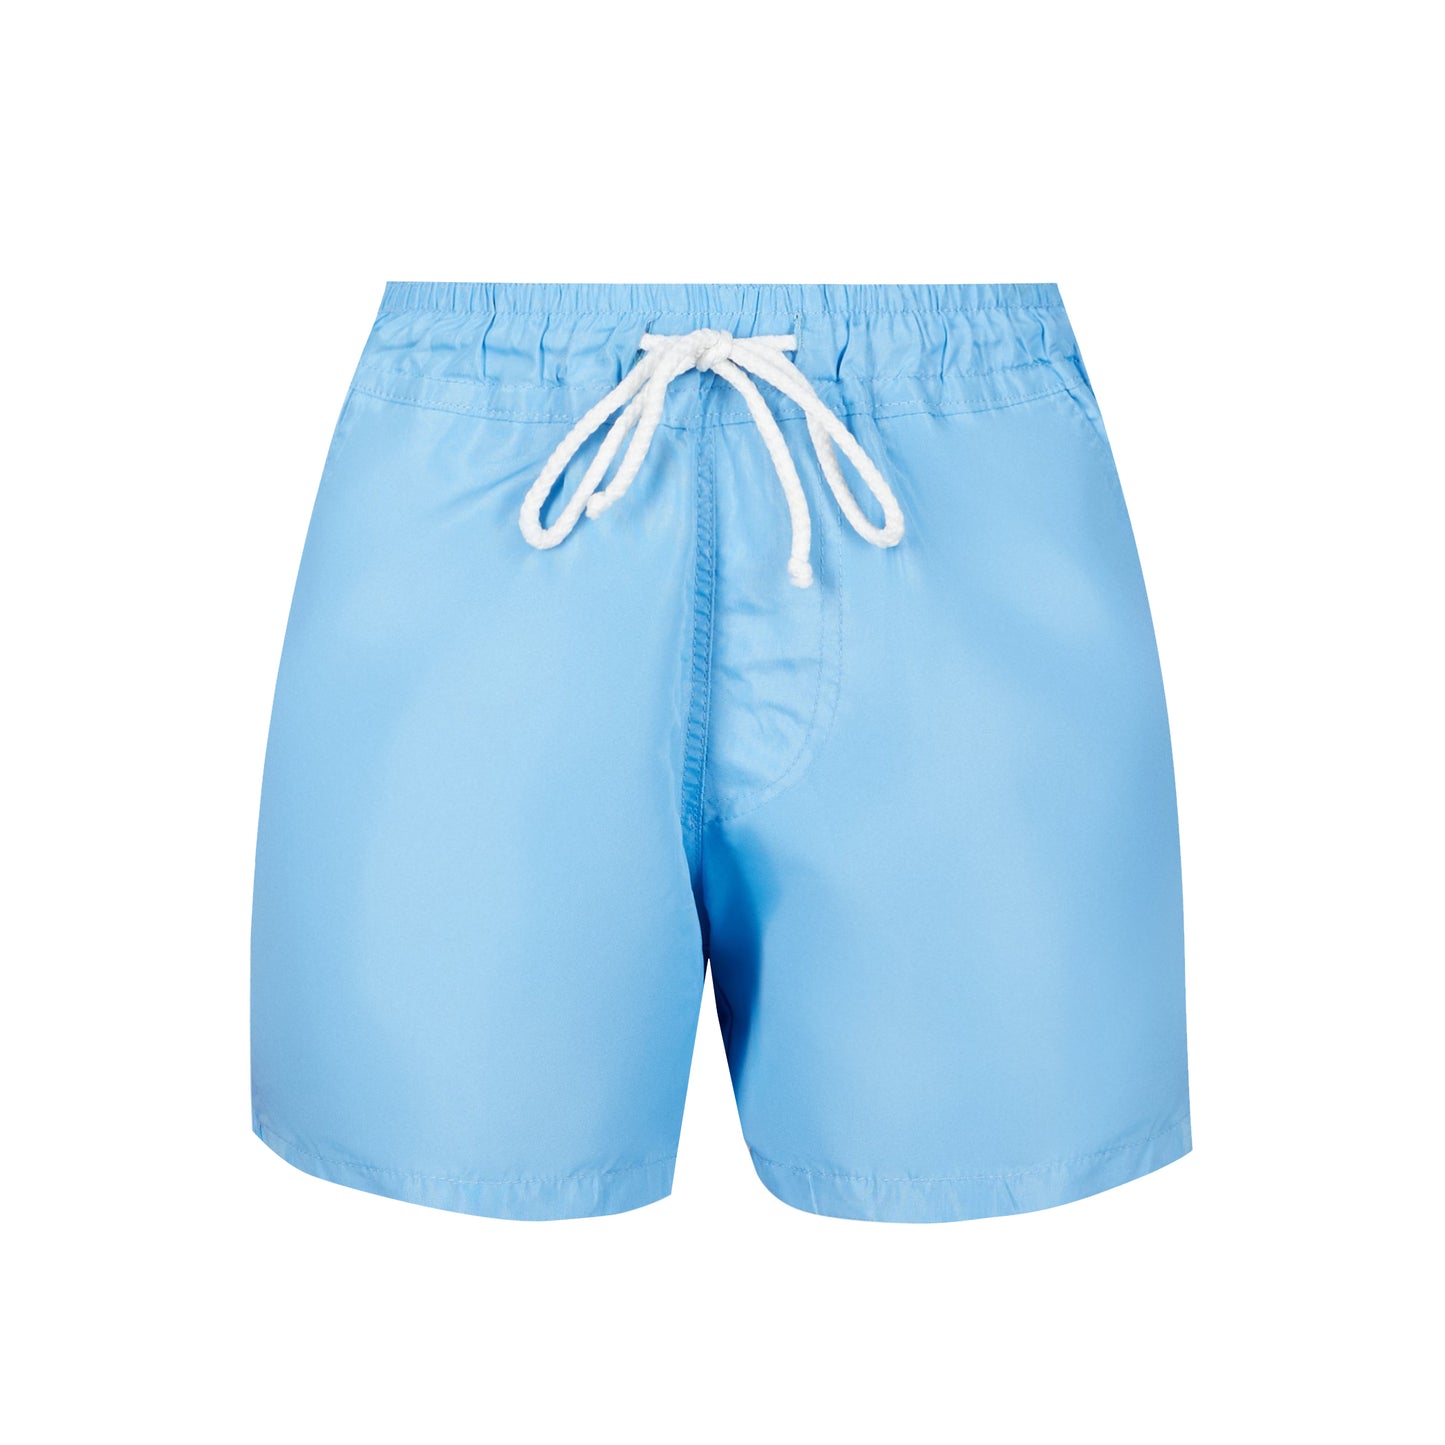 Basic Swim Shorts (Solid Colors)